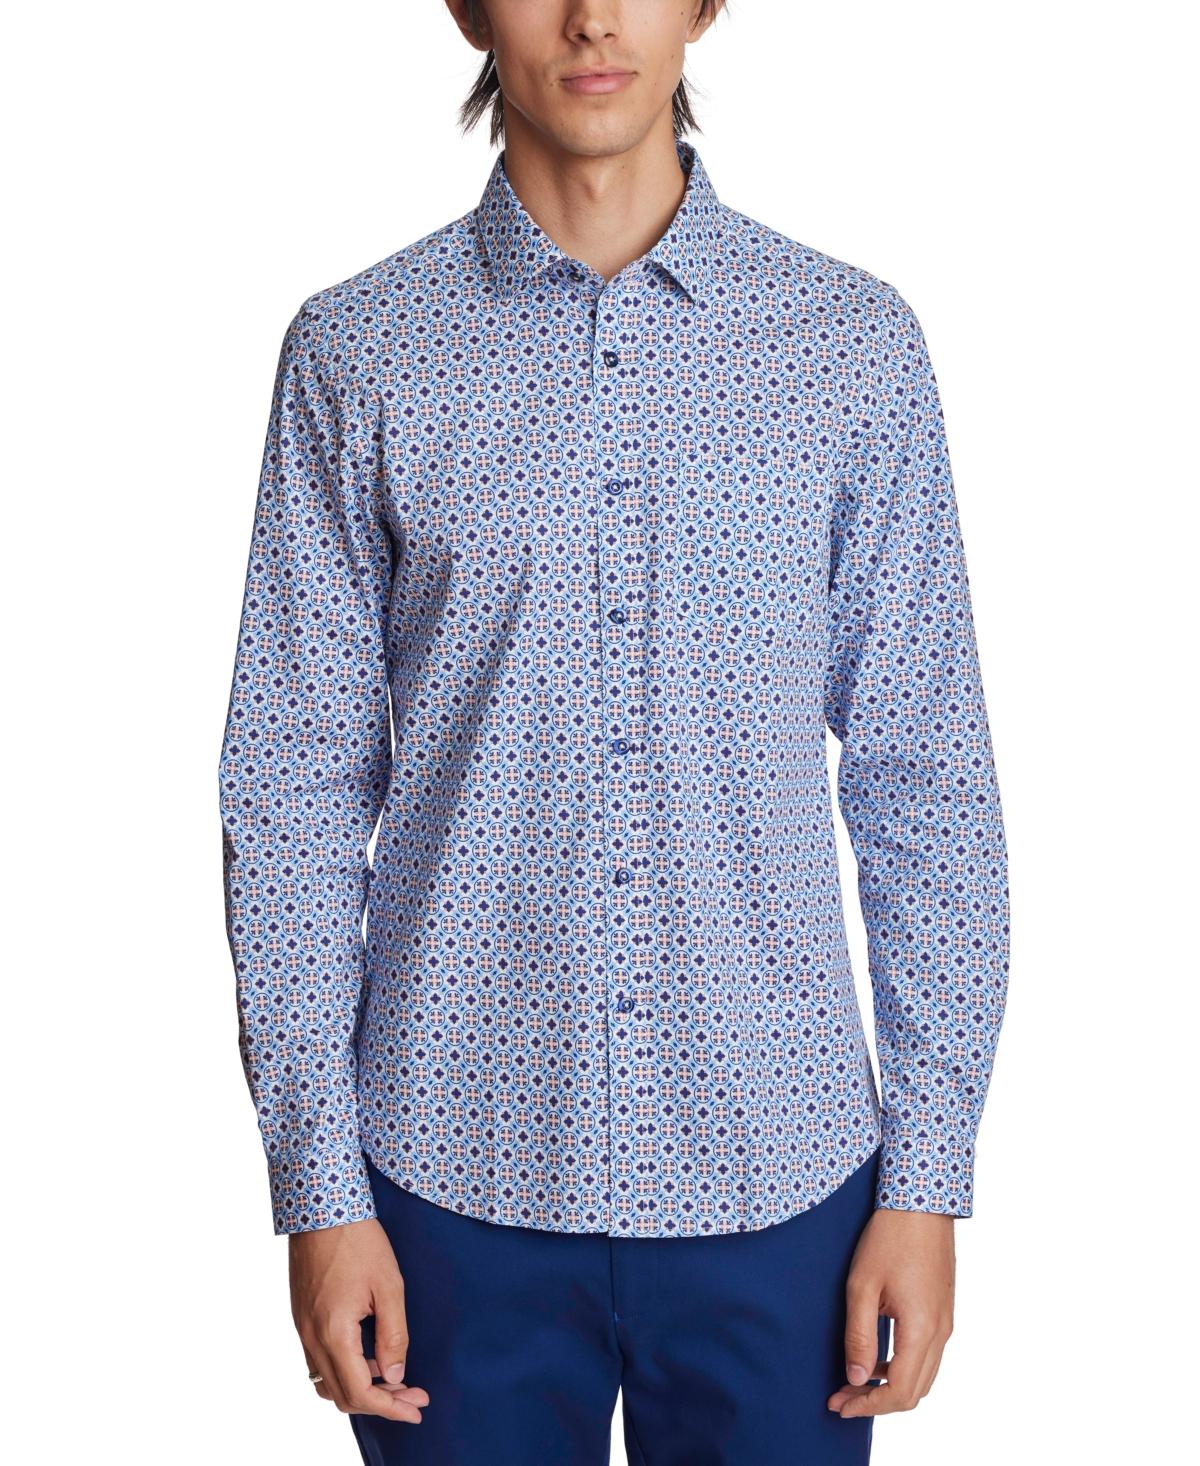 Samuel Spread Collar Shirt - New Blue Paisley